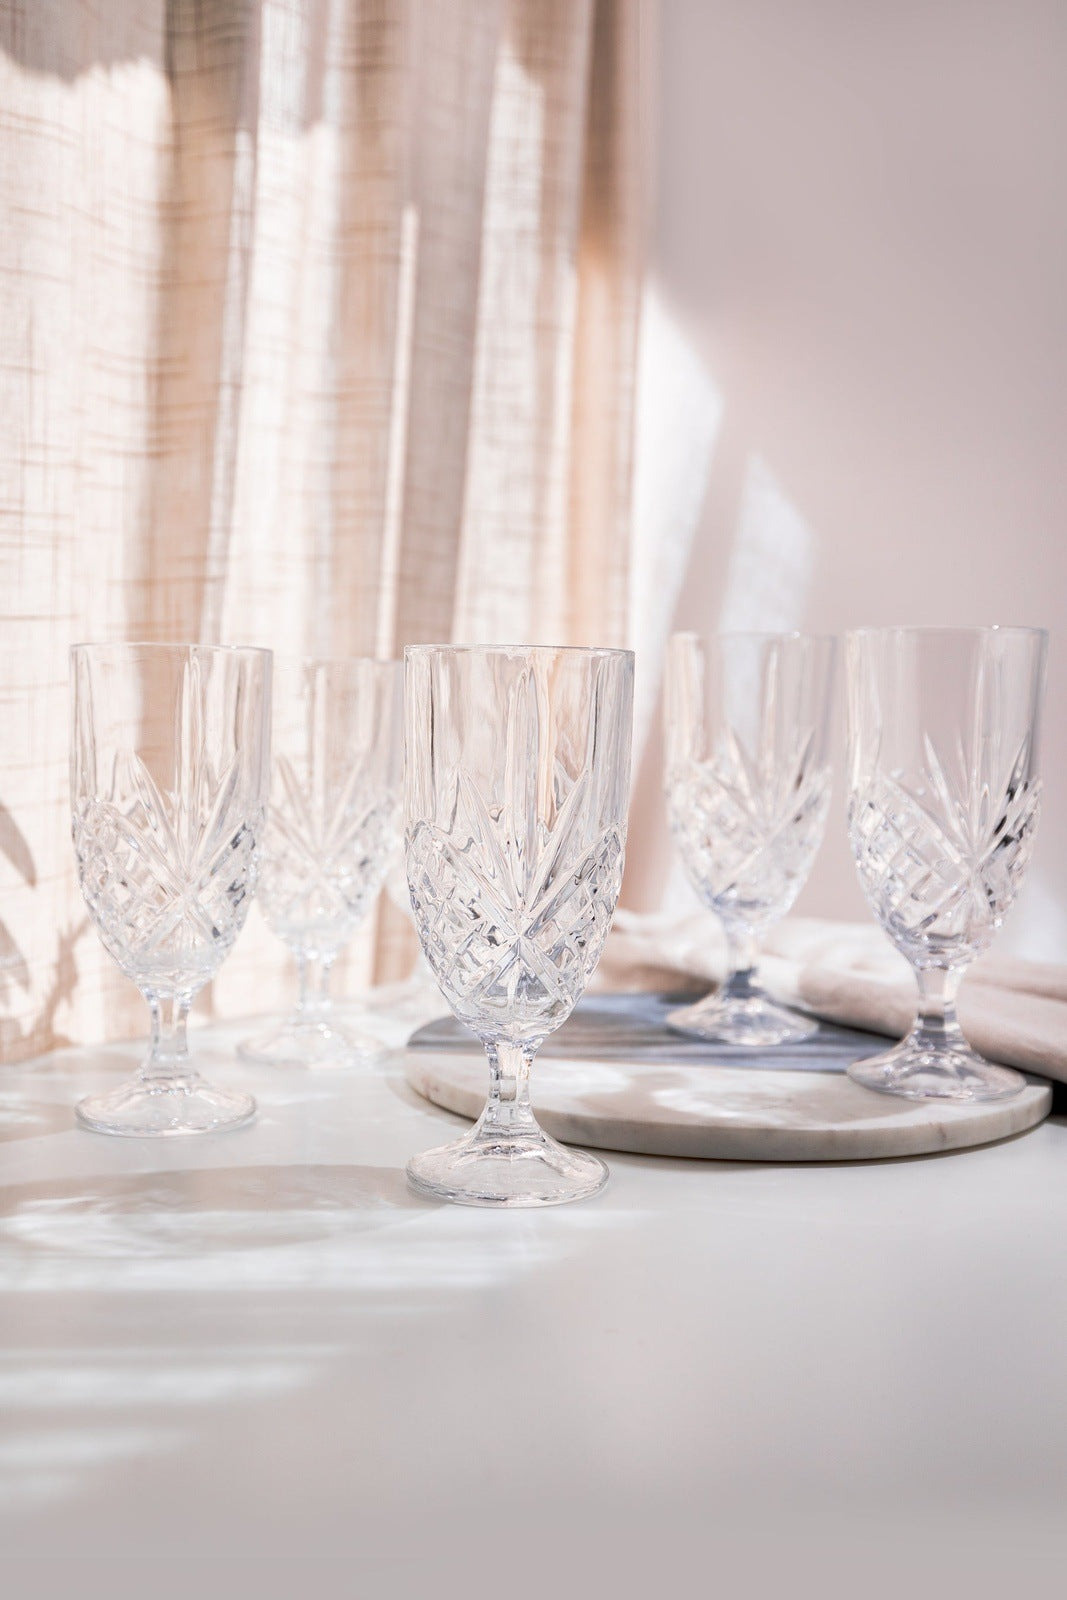 Killarney Crystal Trinity Tall Glass Set Of 6 3 Shaws Department Stores